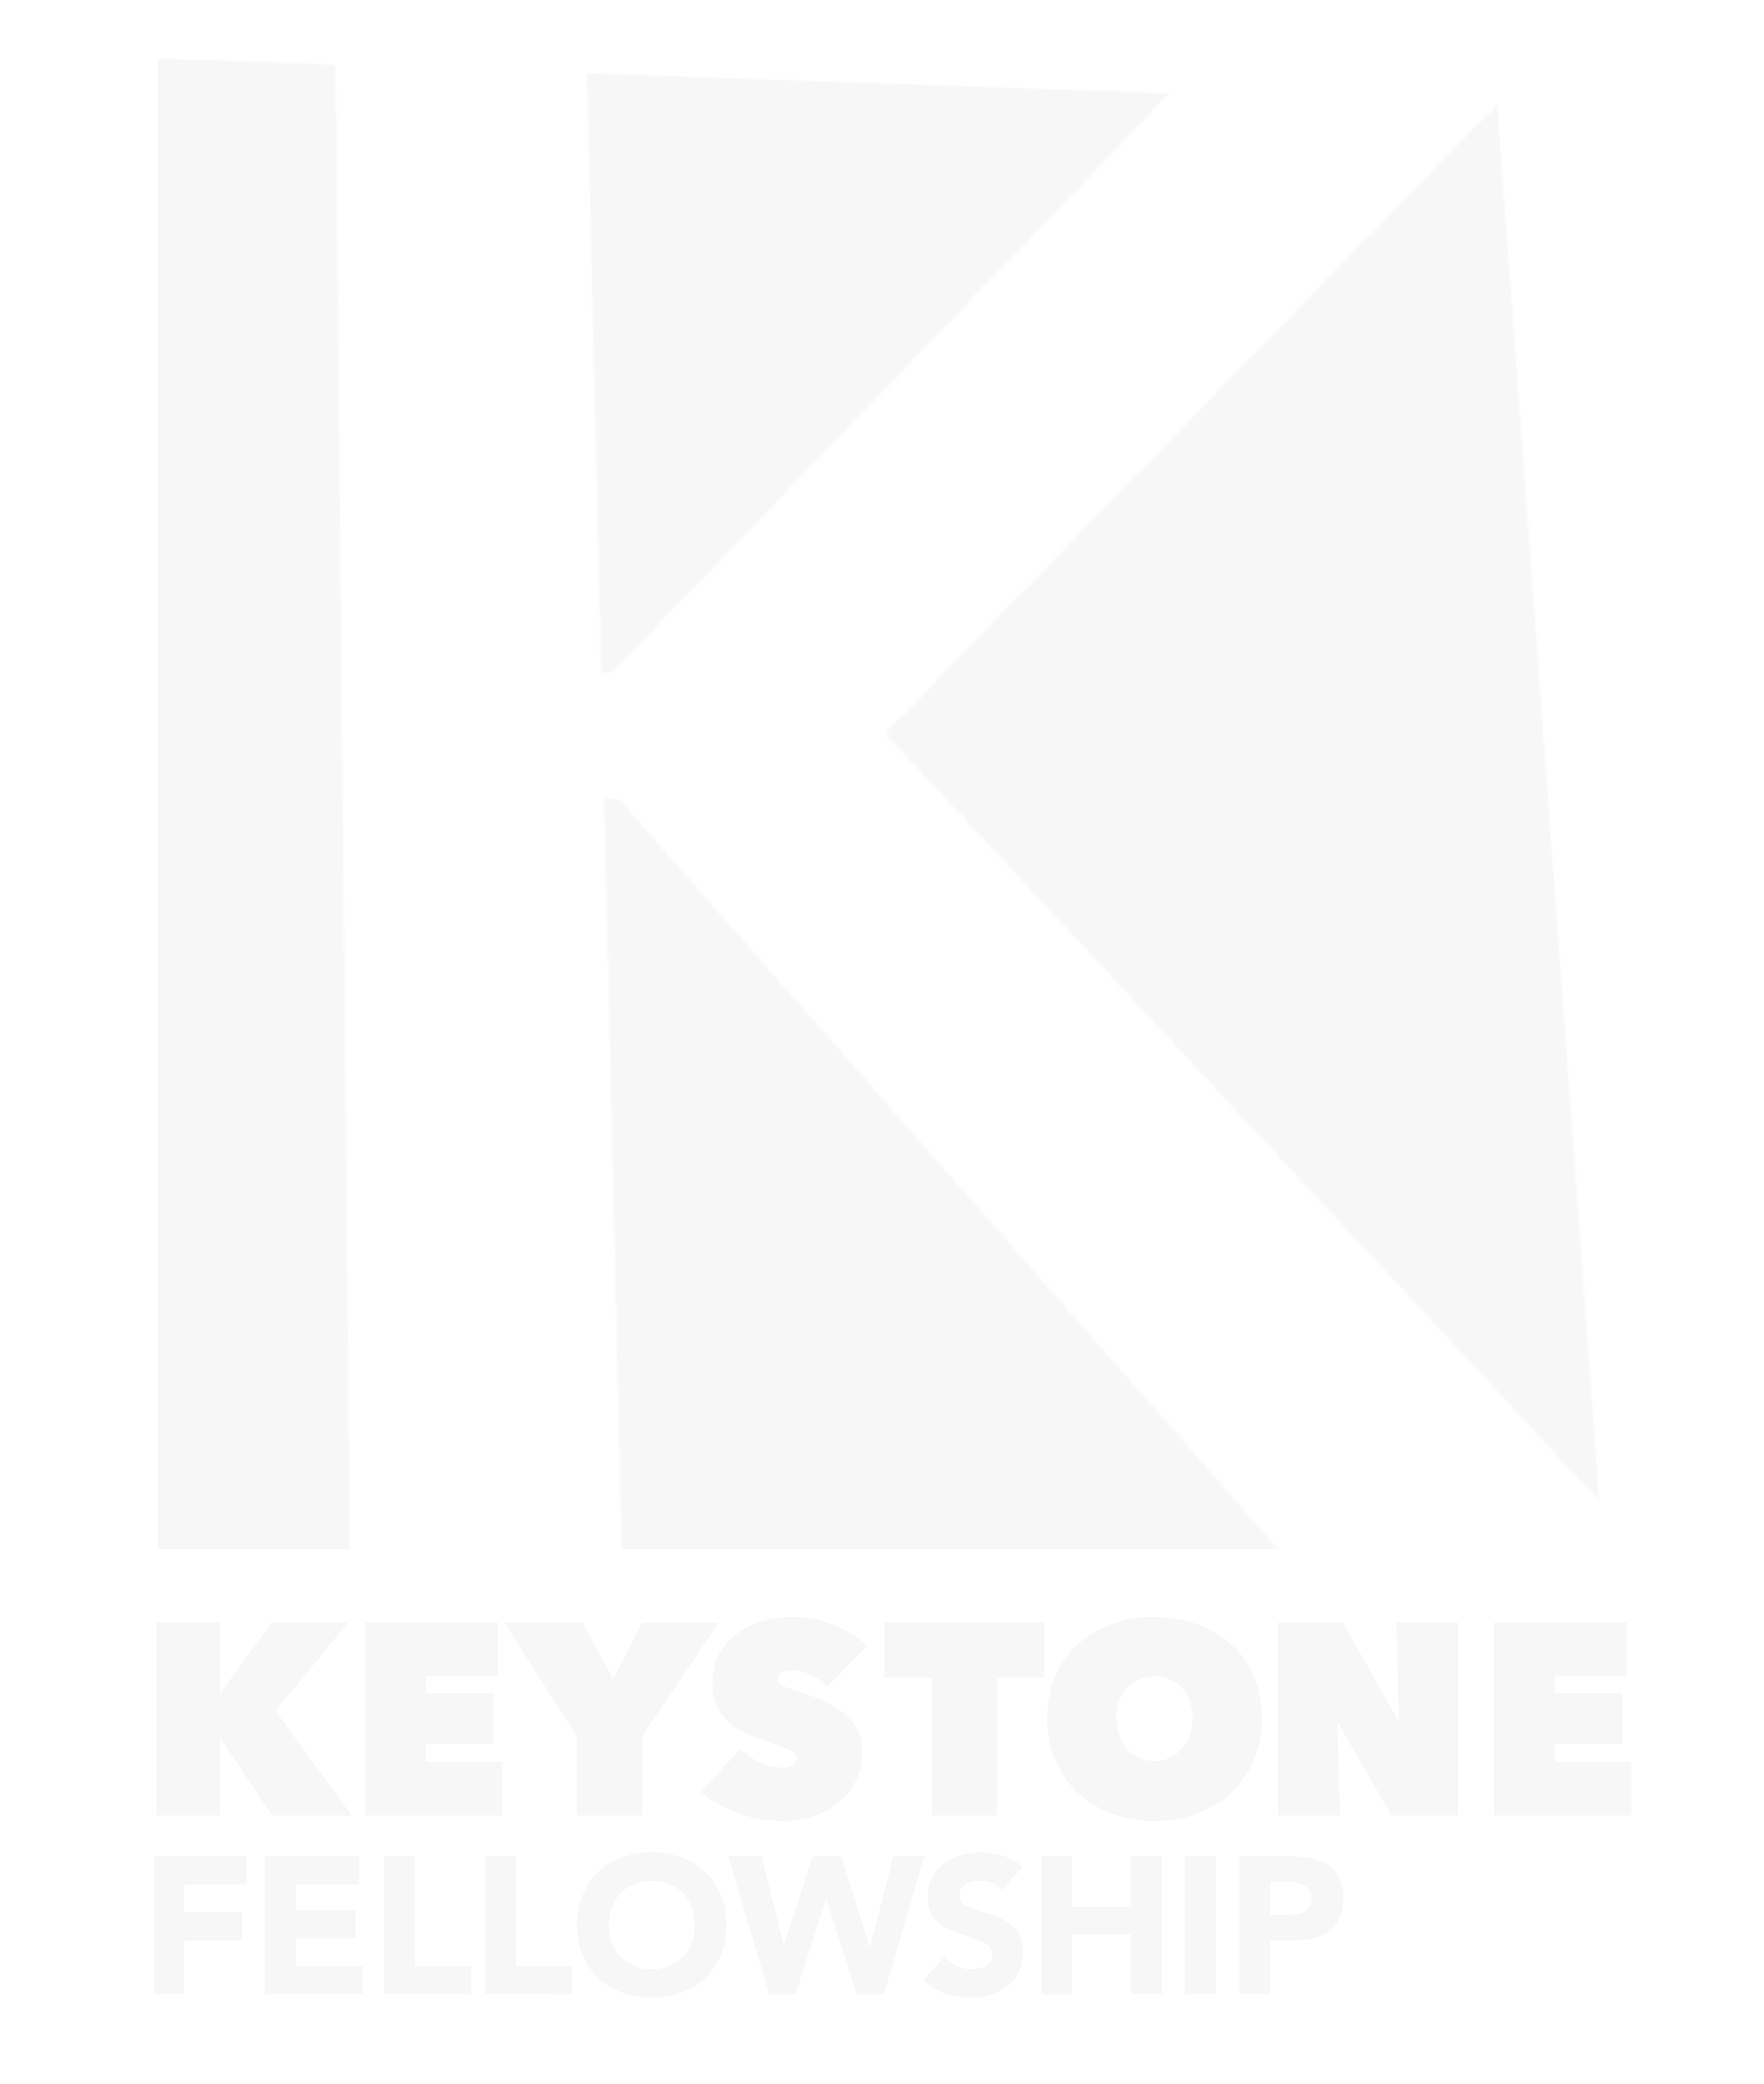 Keystone Fellowship